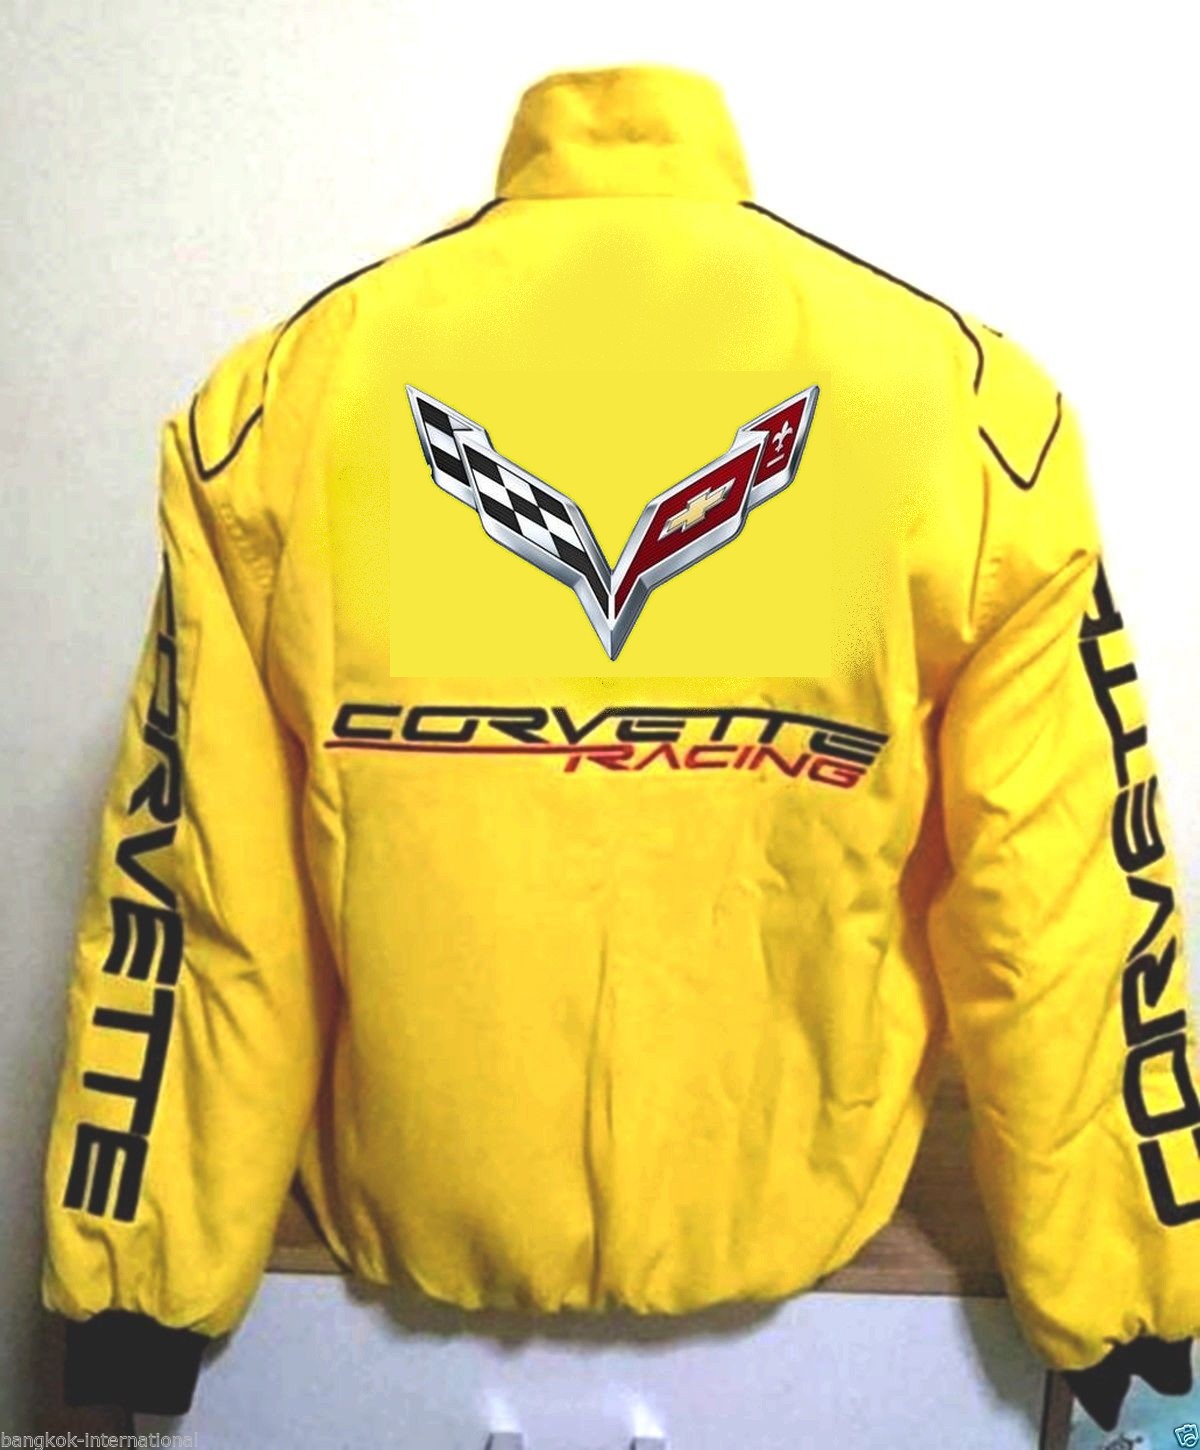 Corvette C7 Yelow Jacket for Winter & Autumn - Bangkok-International